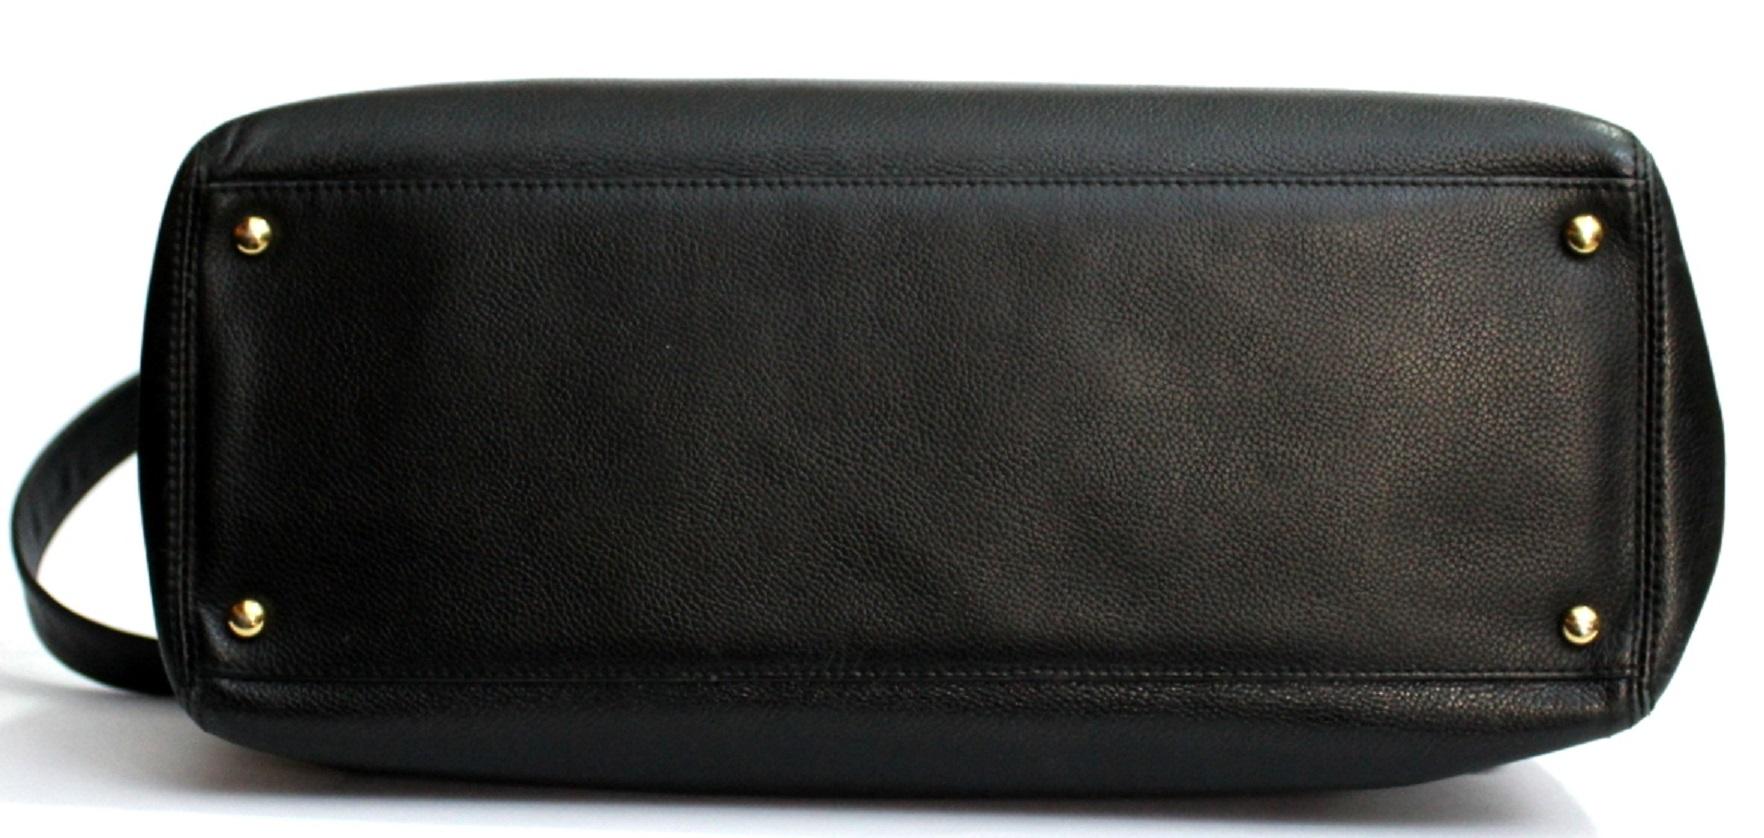 2013/2014 Chanel Black Leather Executive Bag 2